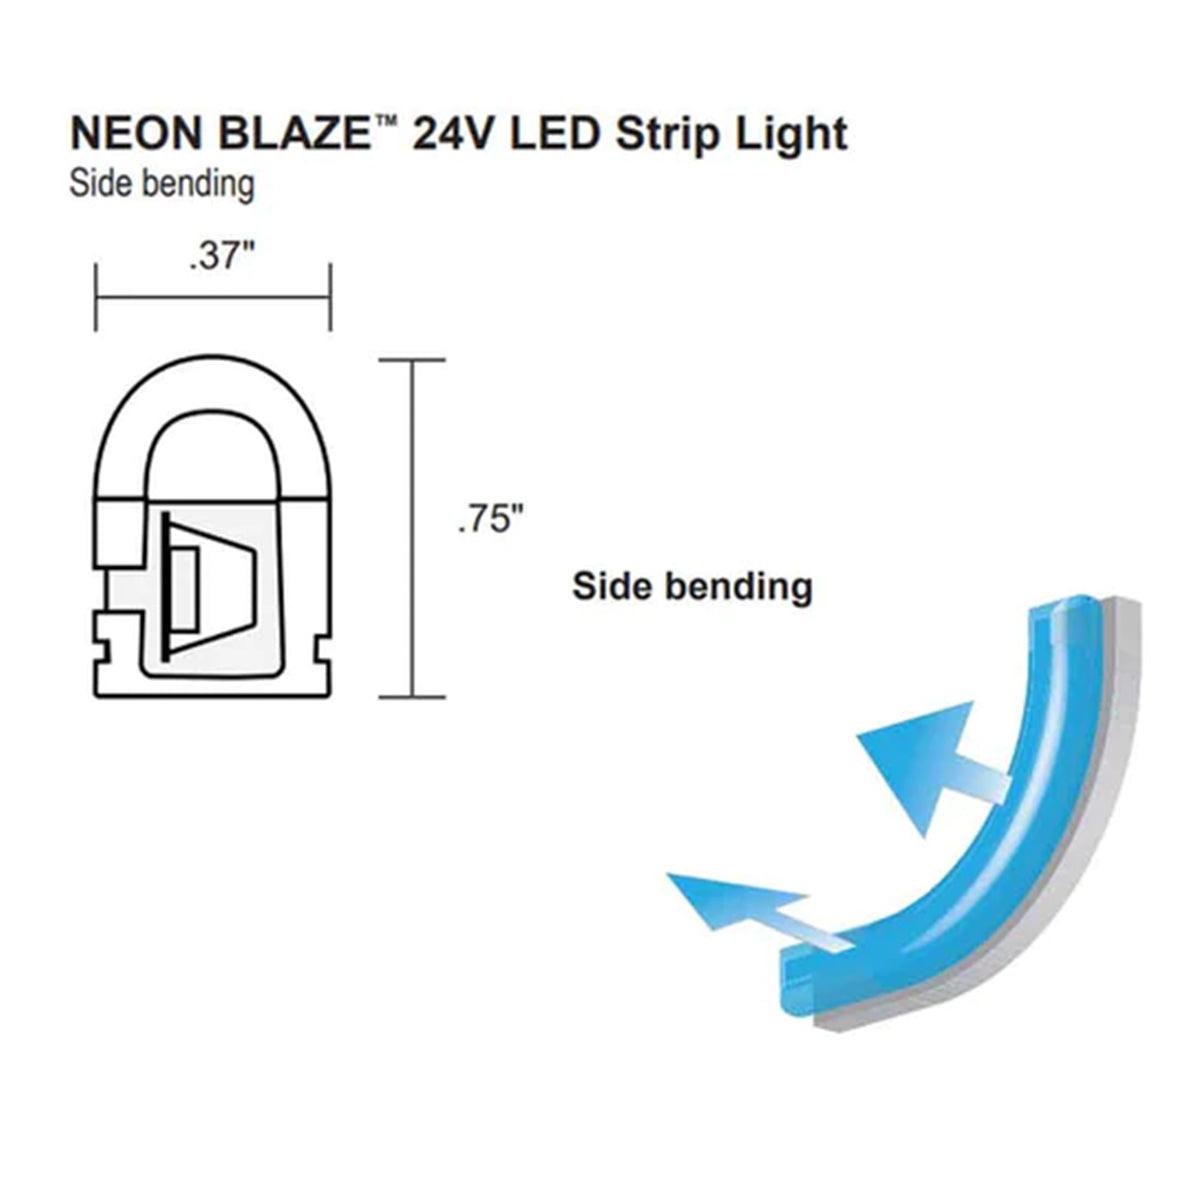 Neon BLAZE LED Neon Strip Light, Pink, 24V, Side Bending